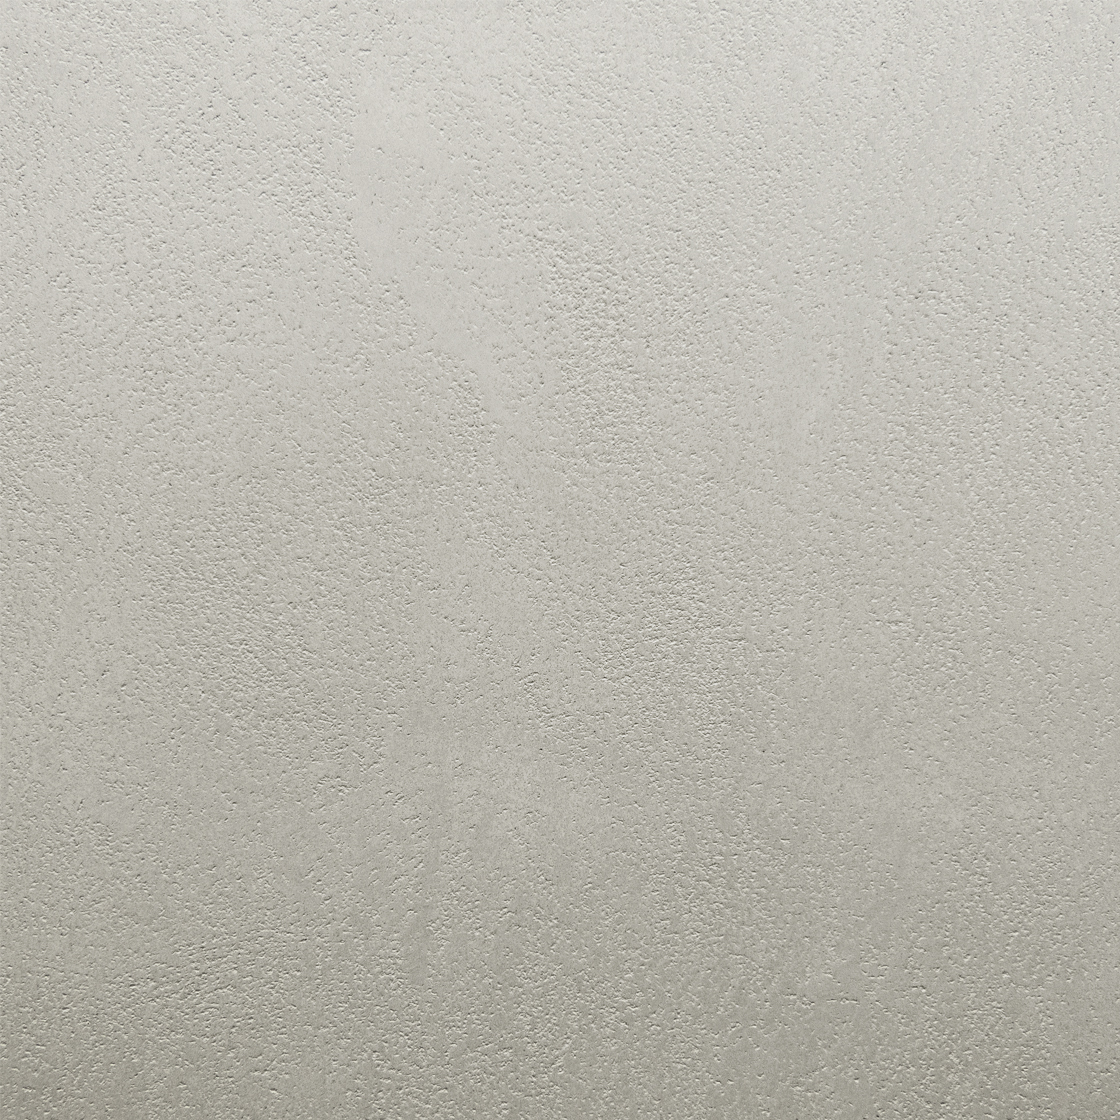 Close up of Armourcoat leatherstone exterior polished plaster finish - 11